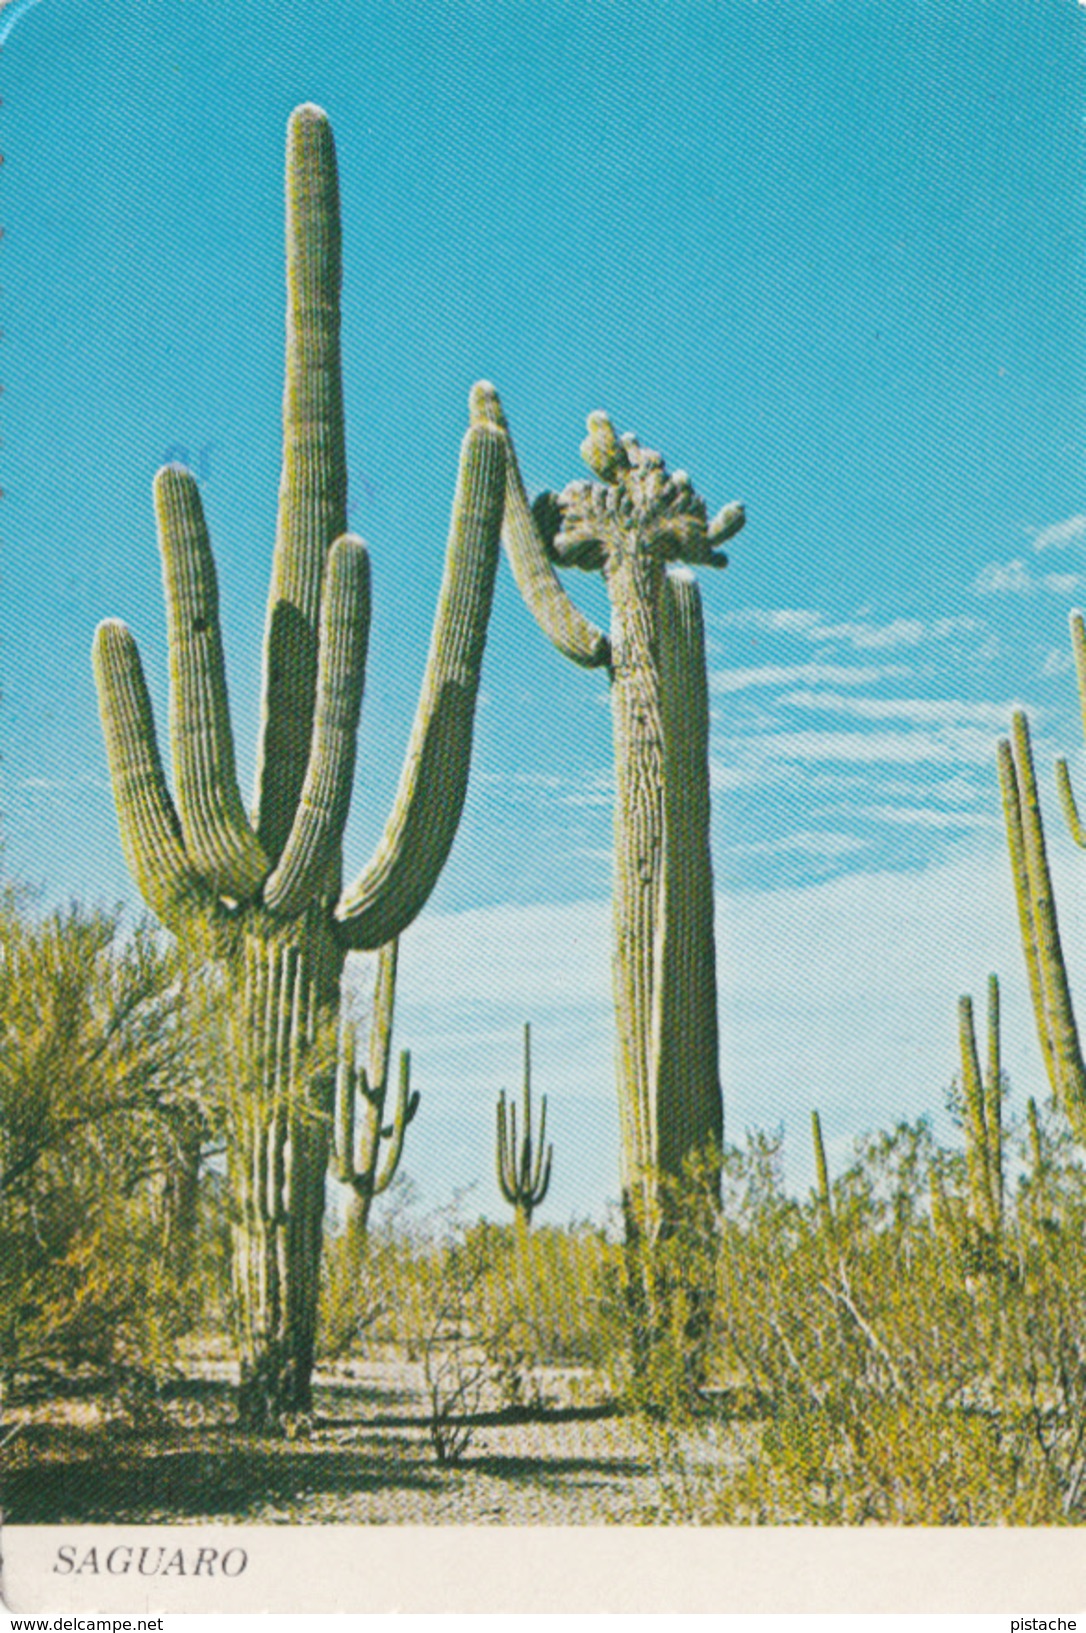 Cactus Saguaro In Sonoran Desert - USA & Mexico - Stamp & Postmark 1979 - 2 Scans - Cactus